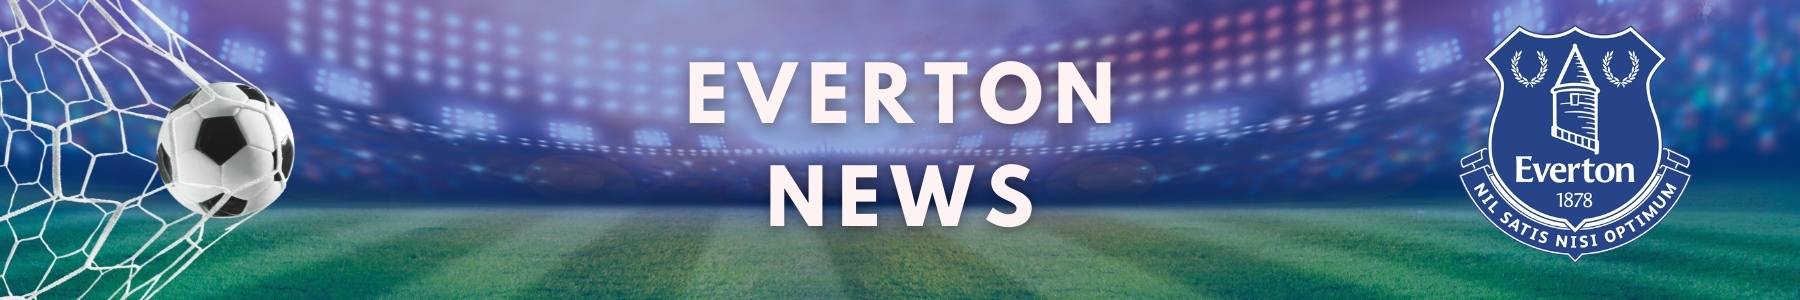 Everton - Latest News